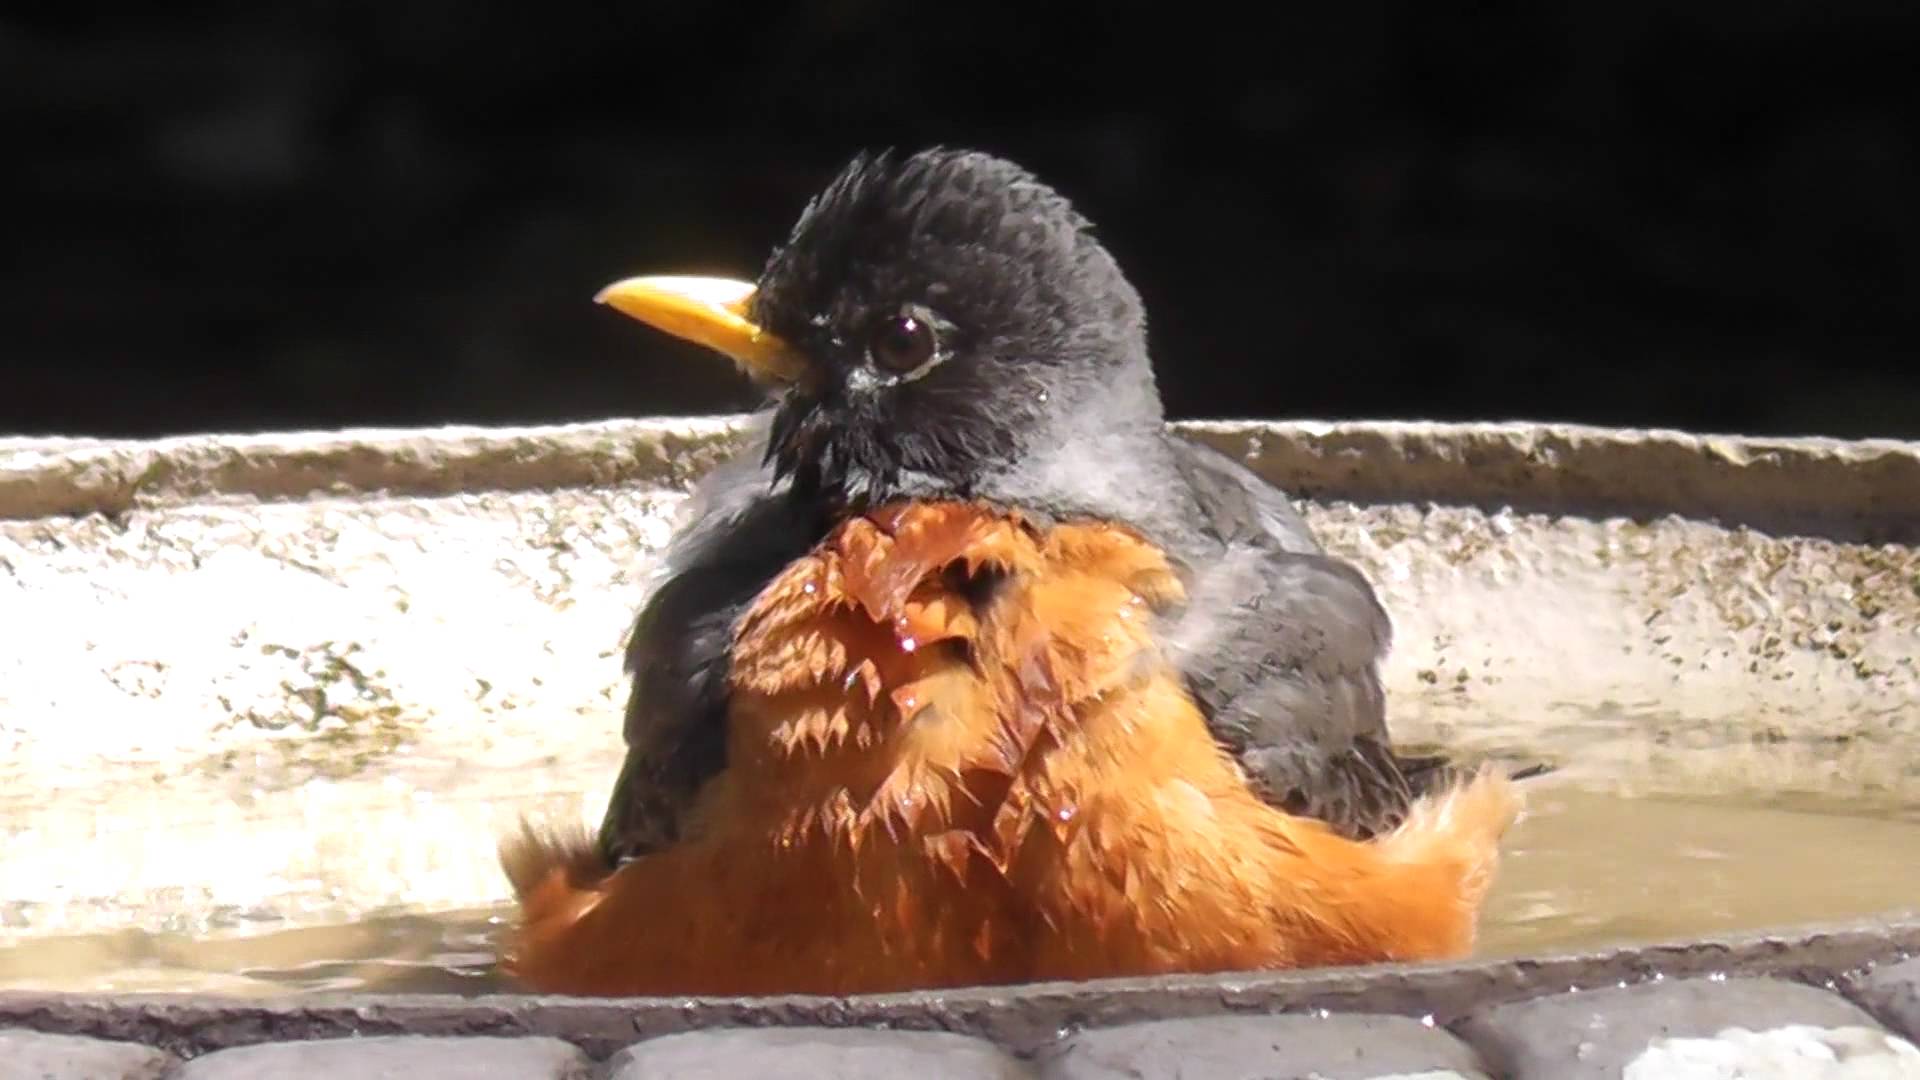 Very Cute Fluffy American Robin Bird Bath - Starling Invasion - YouTube